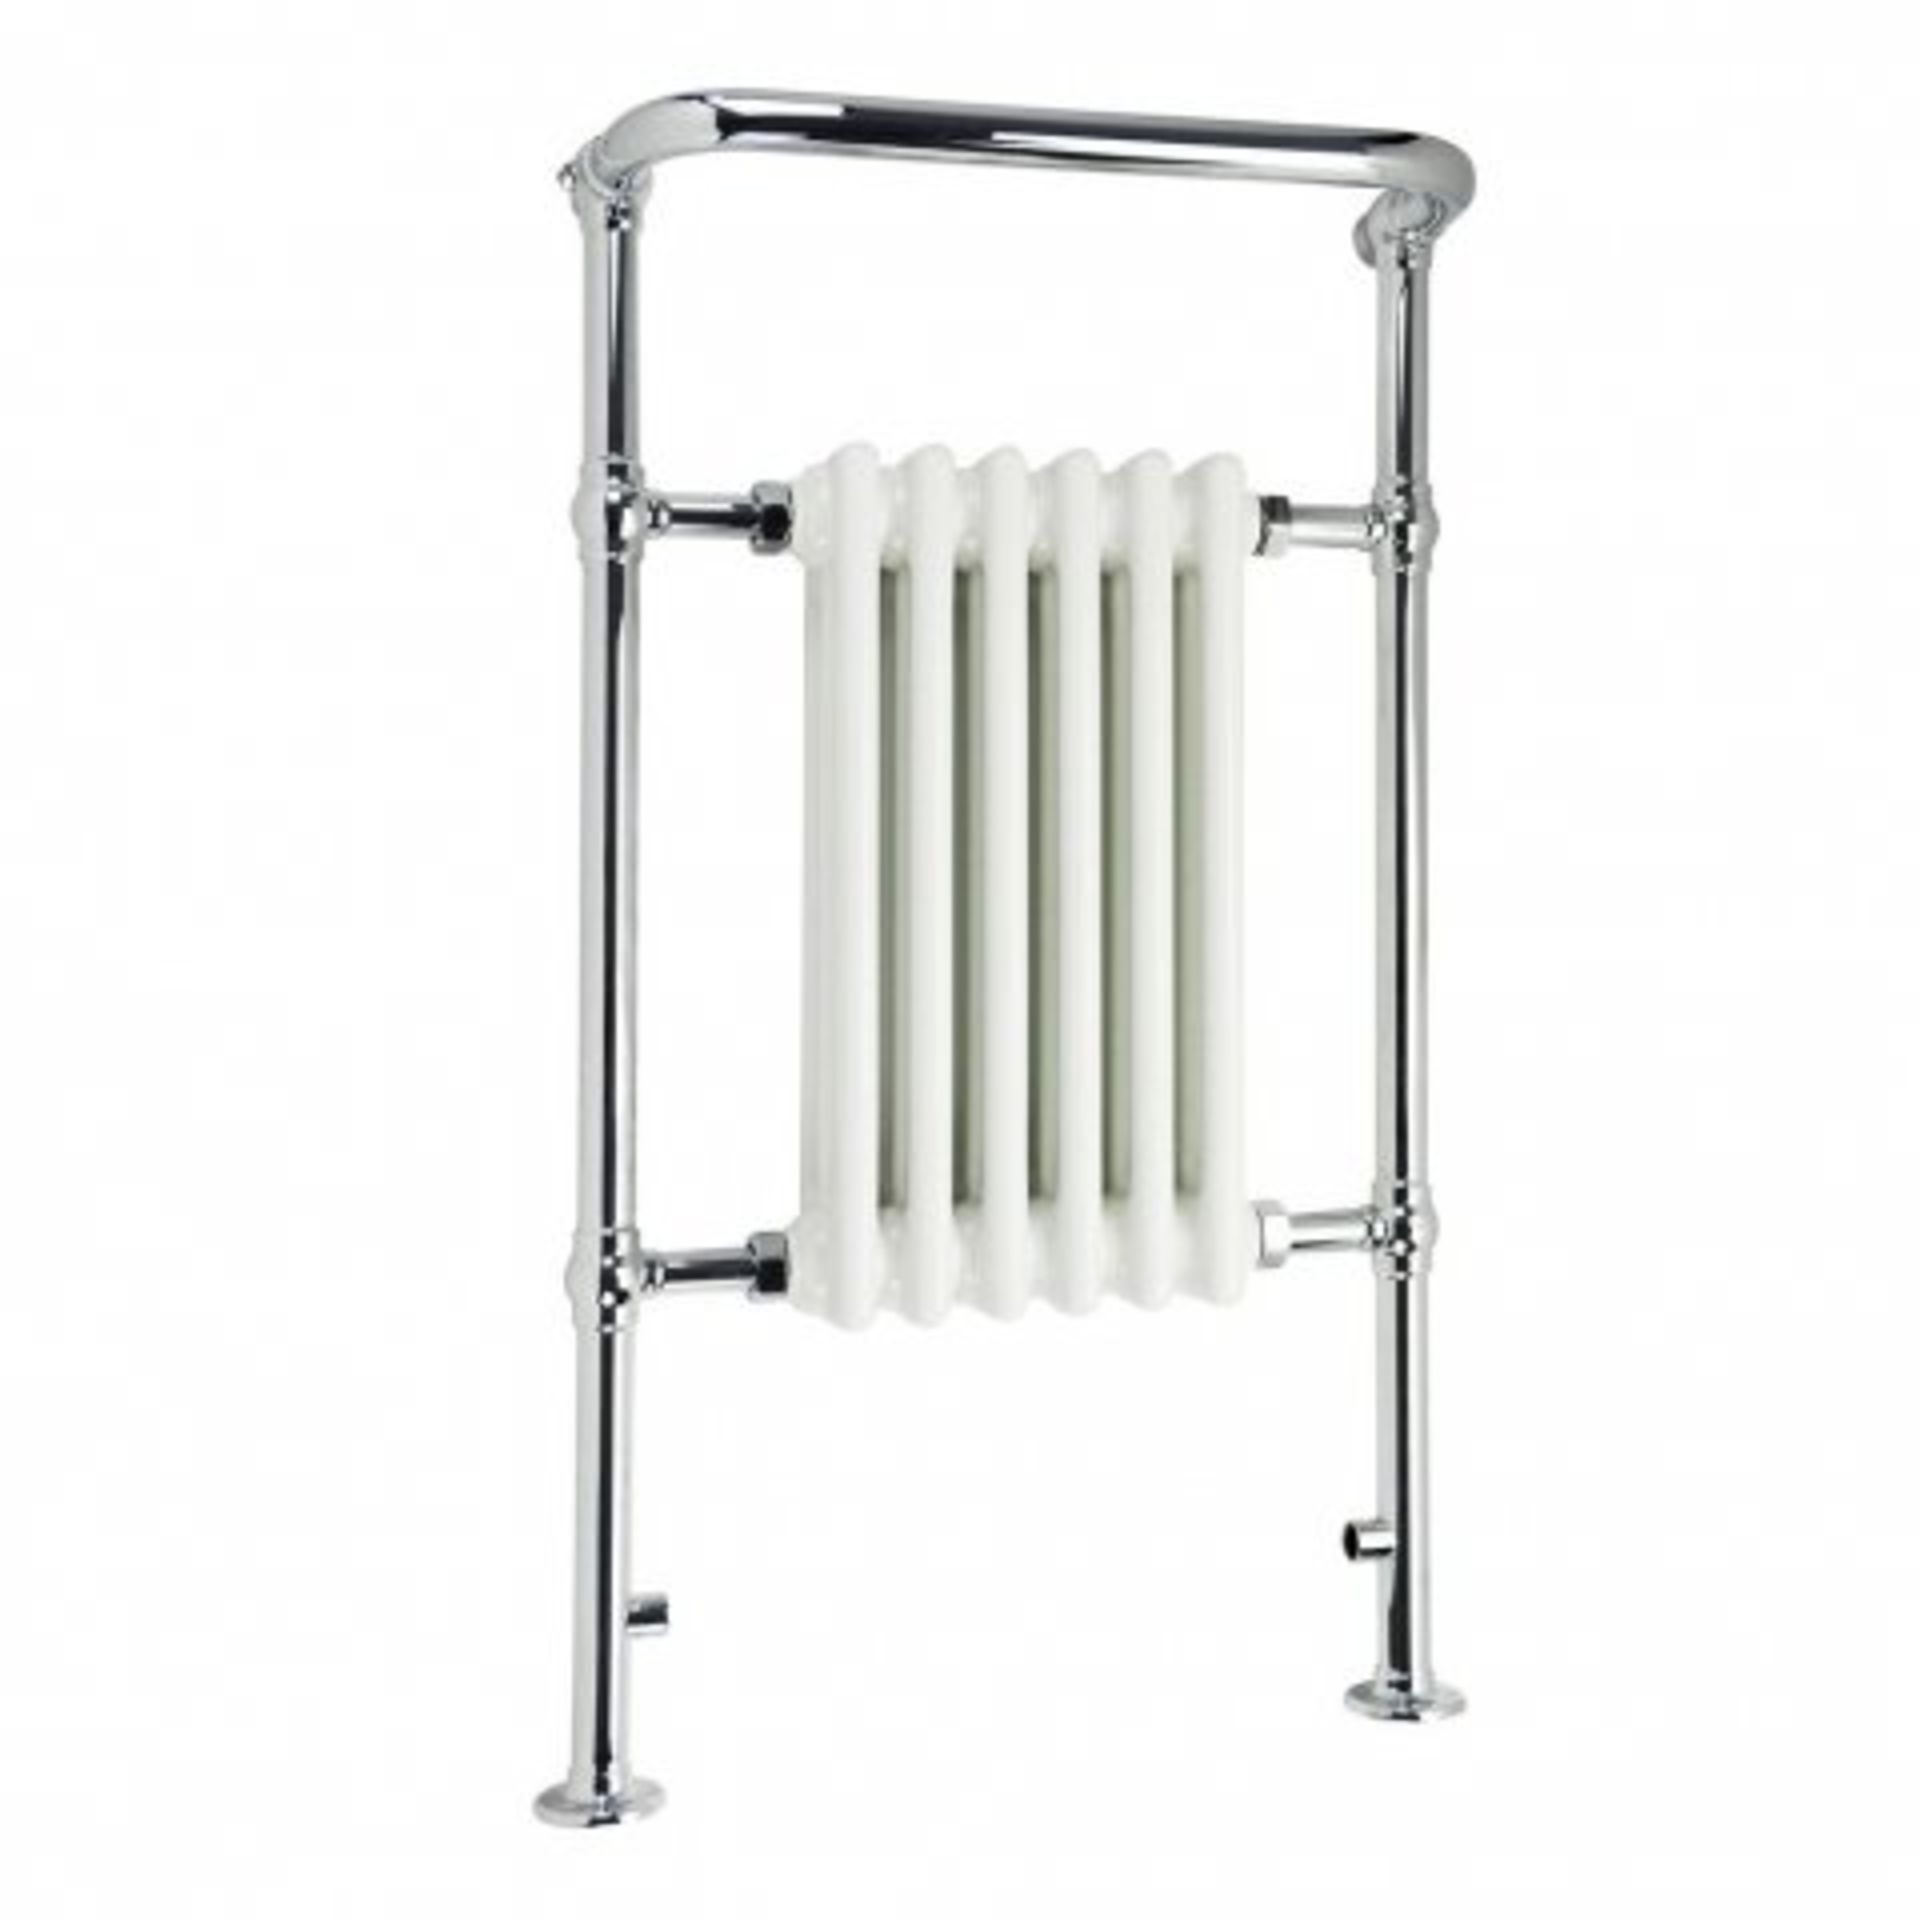 (REF15) 963x583mm Medium Traditional White Towel Rail Radiator - Victoria Premium. RRP £305.99. - Image 4 of 5